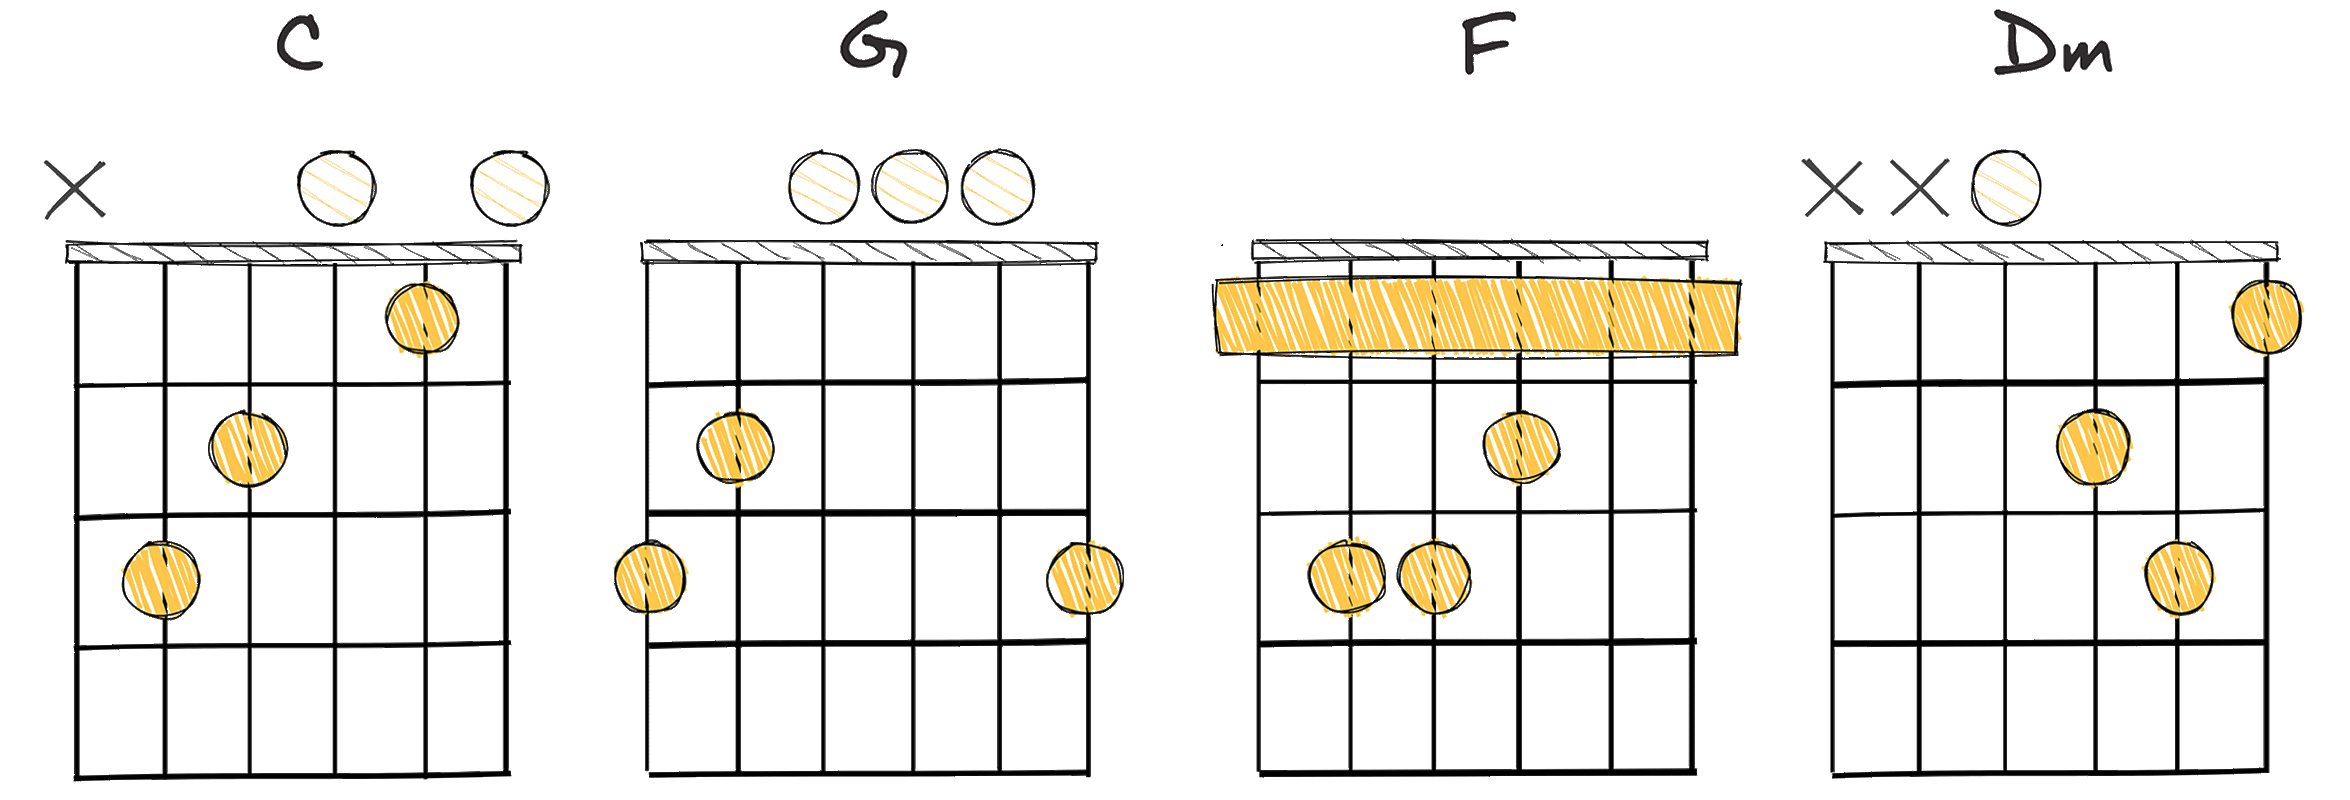 I - V - IV - ii (1-5-4-2) chords diagram